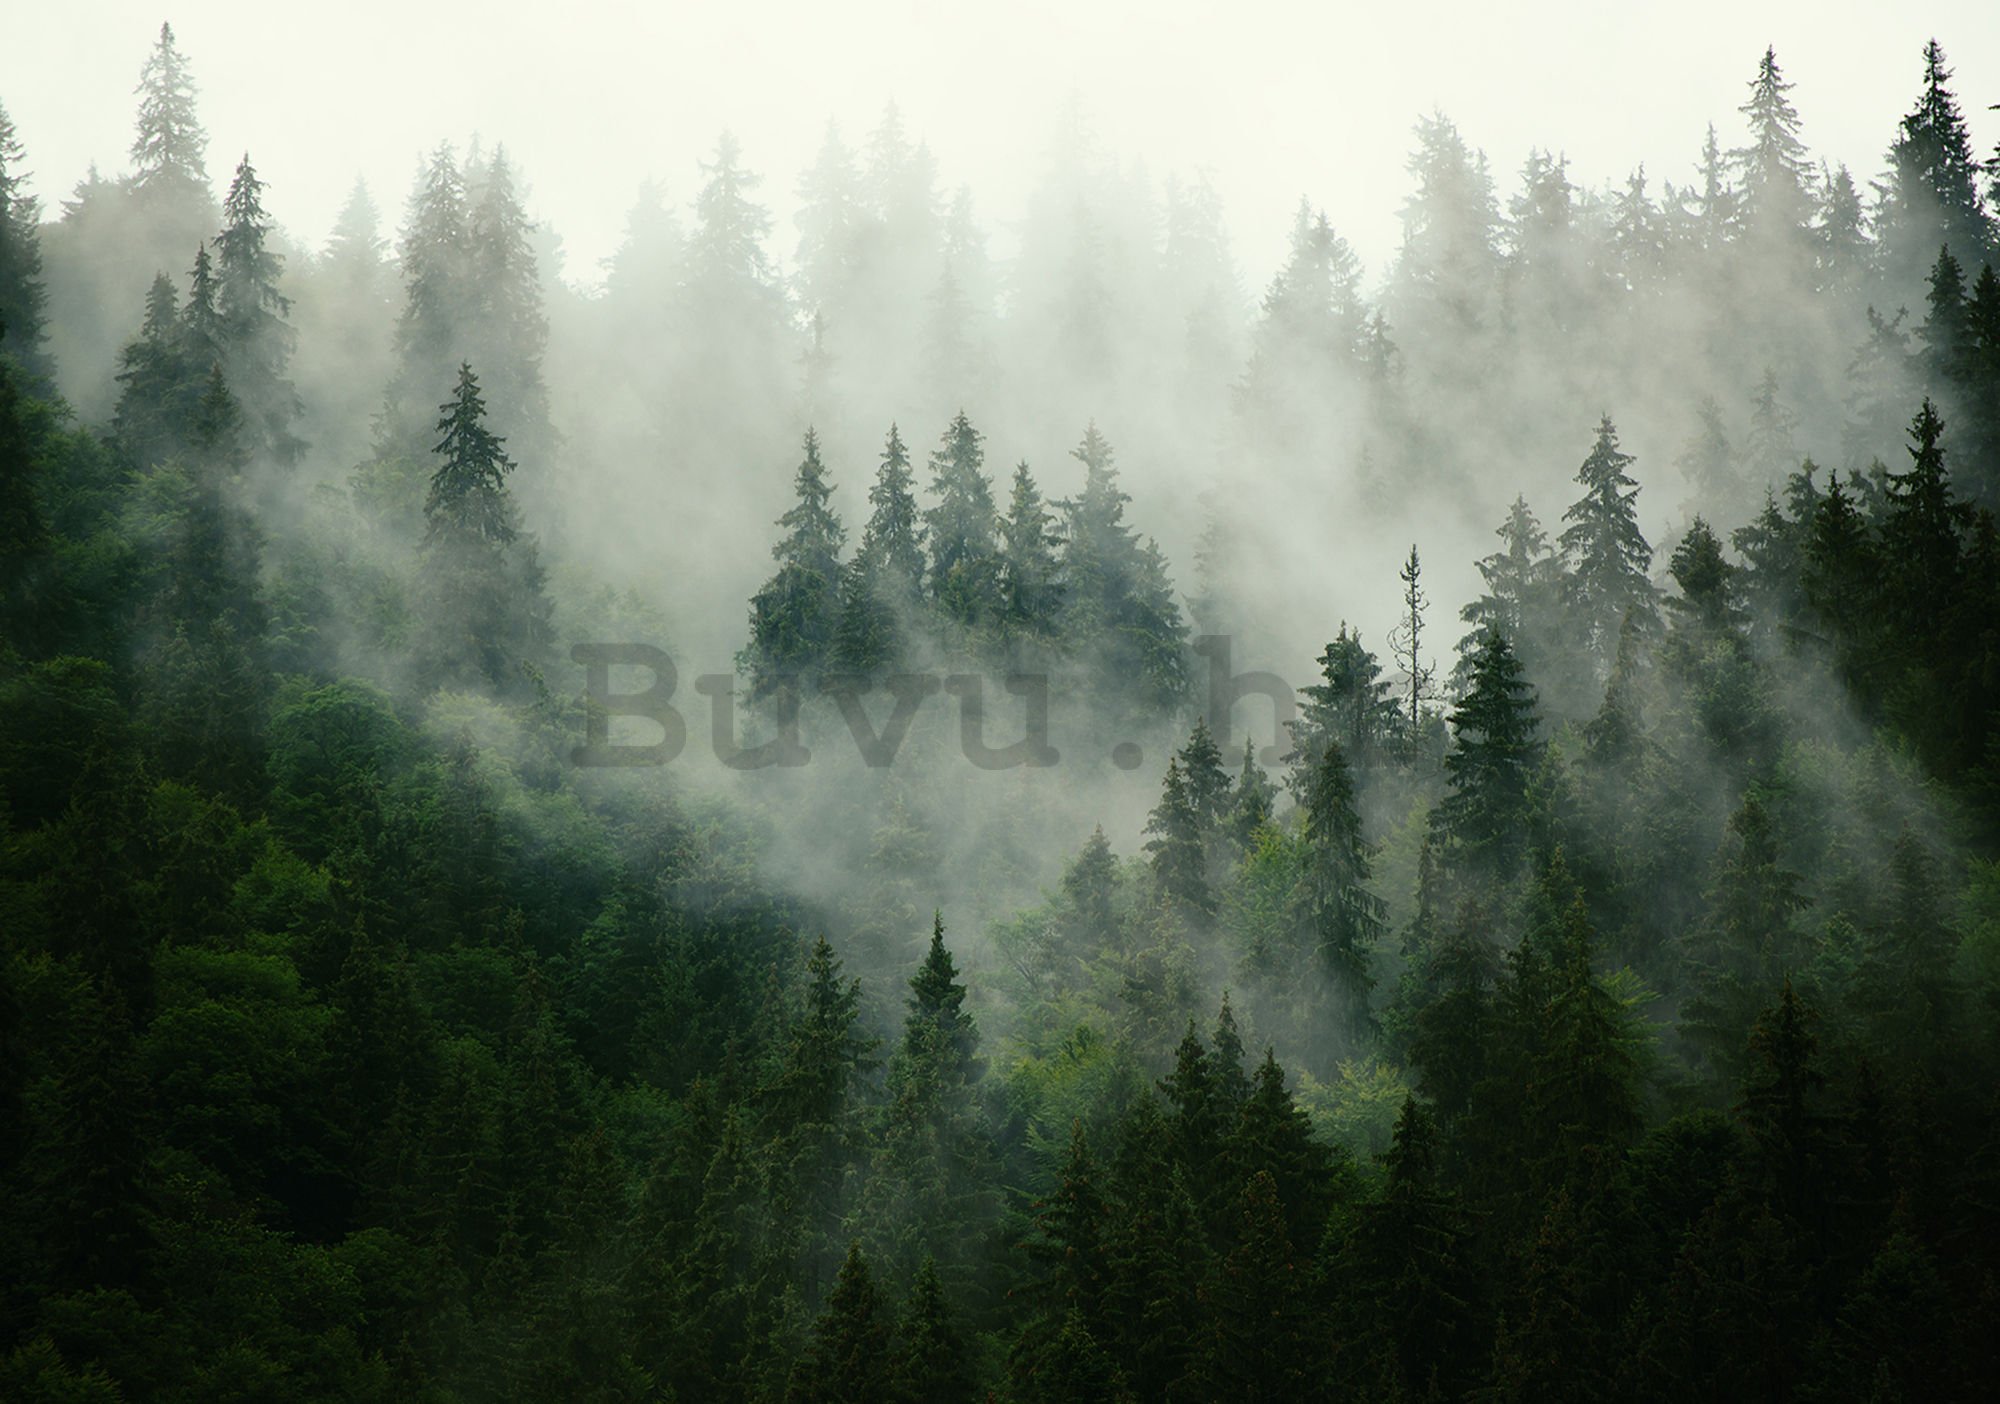 Vlies foto tapeta: Magla iznad šume (1) - 416x254 cm